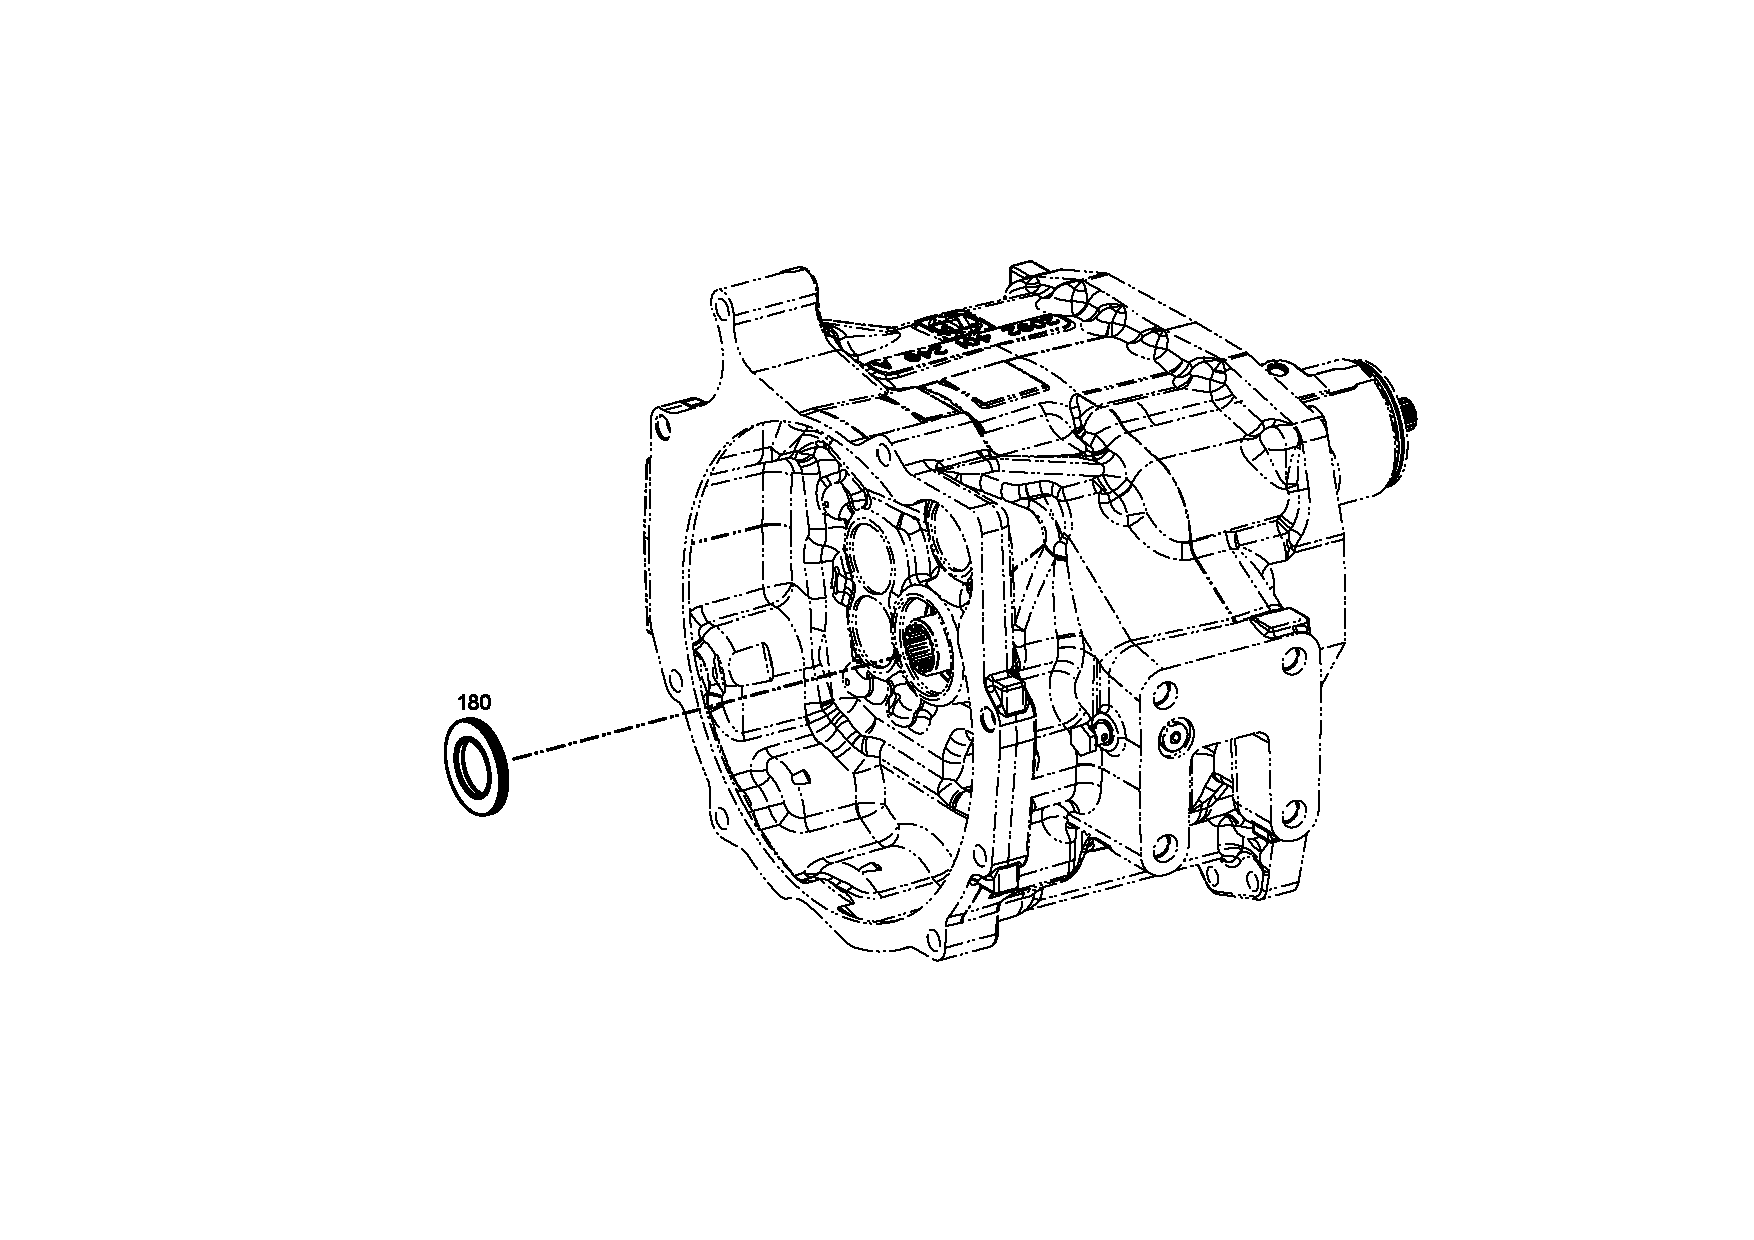 drawing for LANG GMBH 4600182 - CAP SCREW (figure 2)